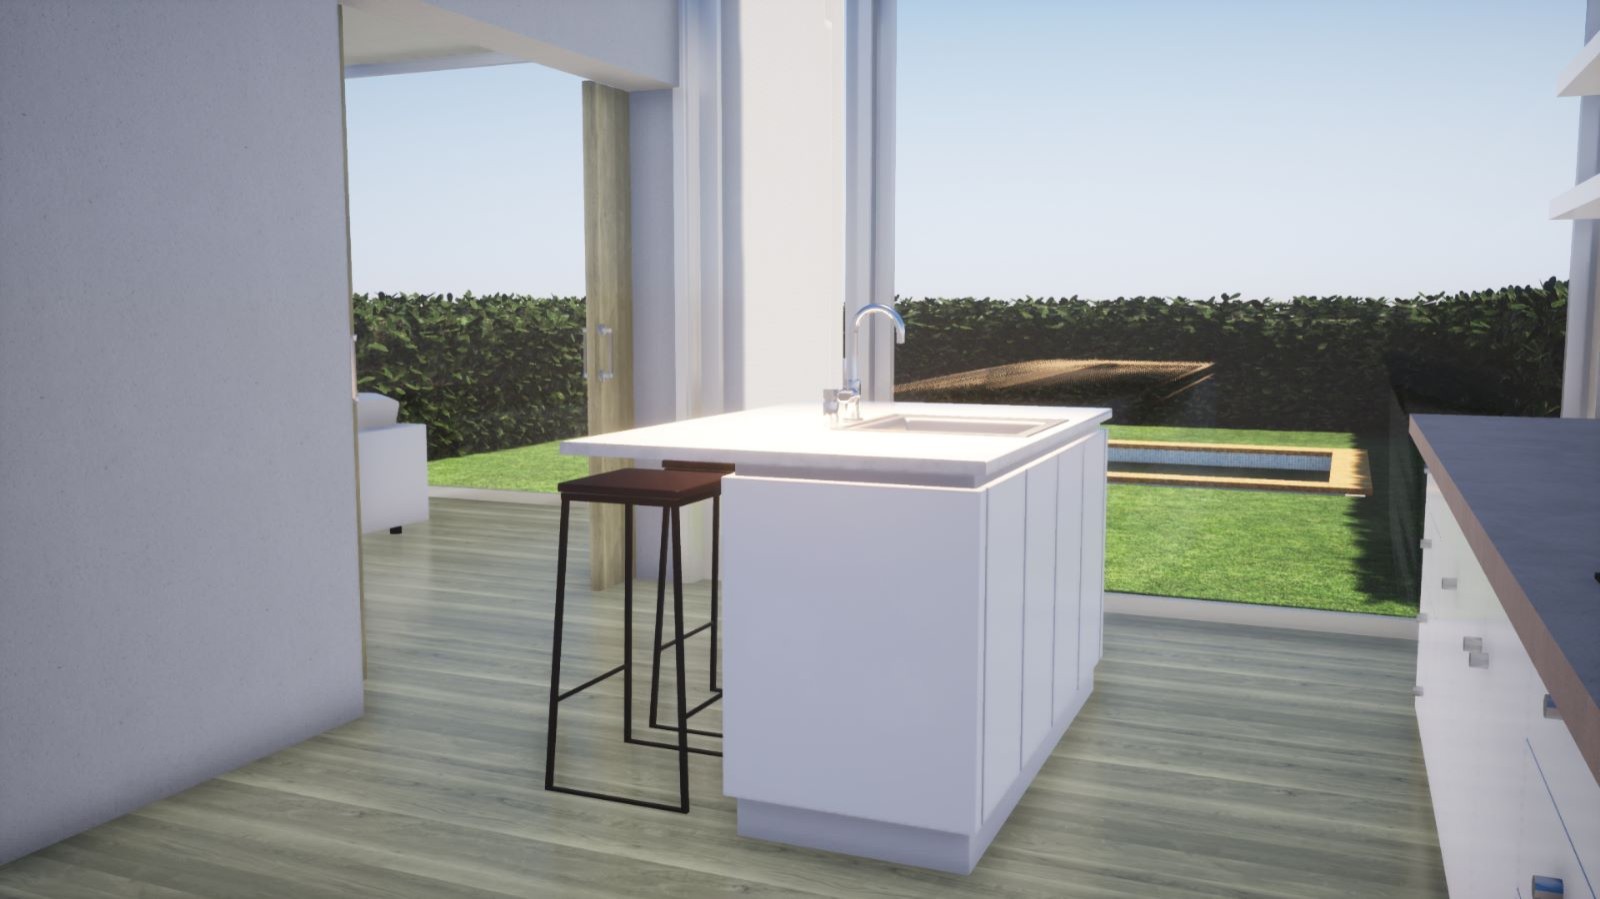 4 bedroom villa, new construction with seaview, for sale in Tavira, Algarve_228006